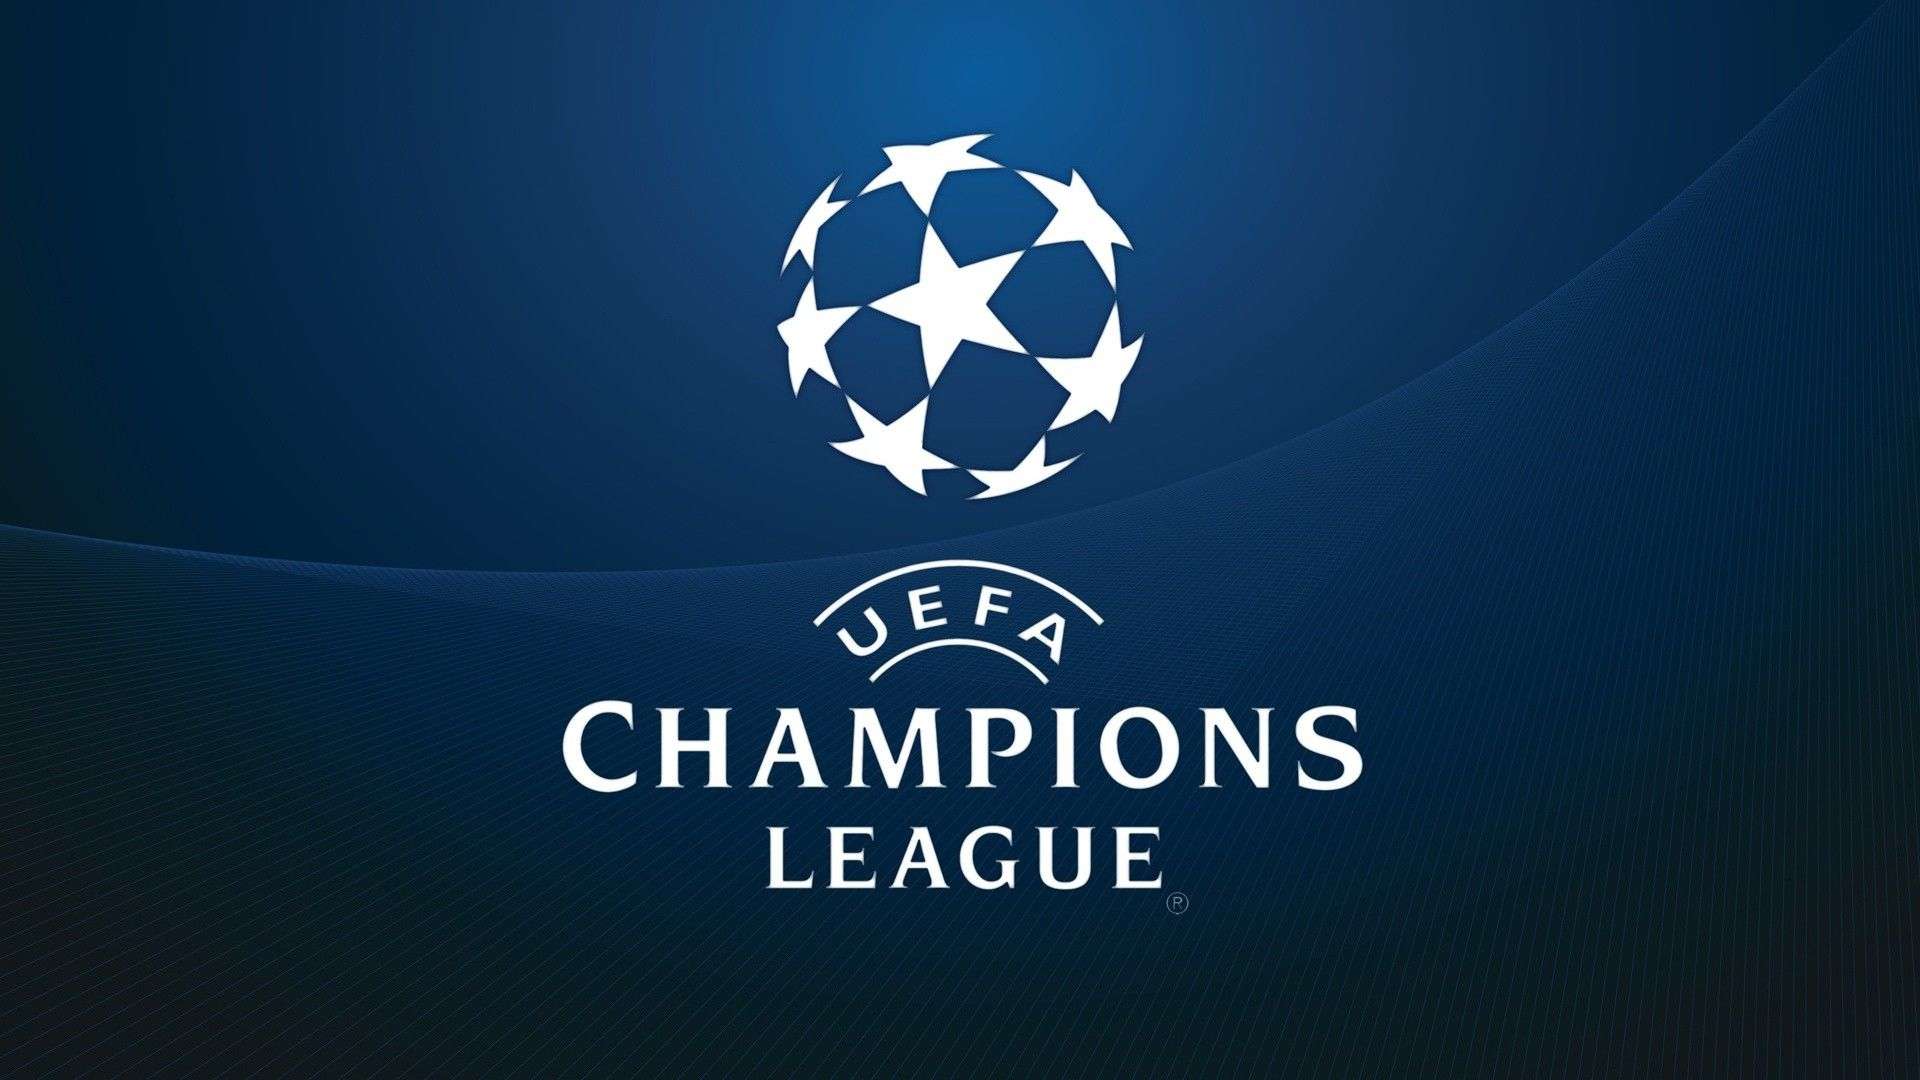 «Reuters»: Το Champions League θα πάει στην Παρί Σεν Ζερμέν!